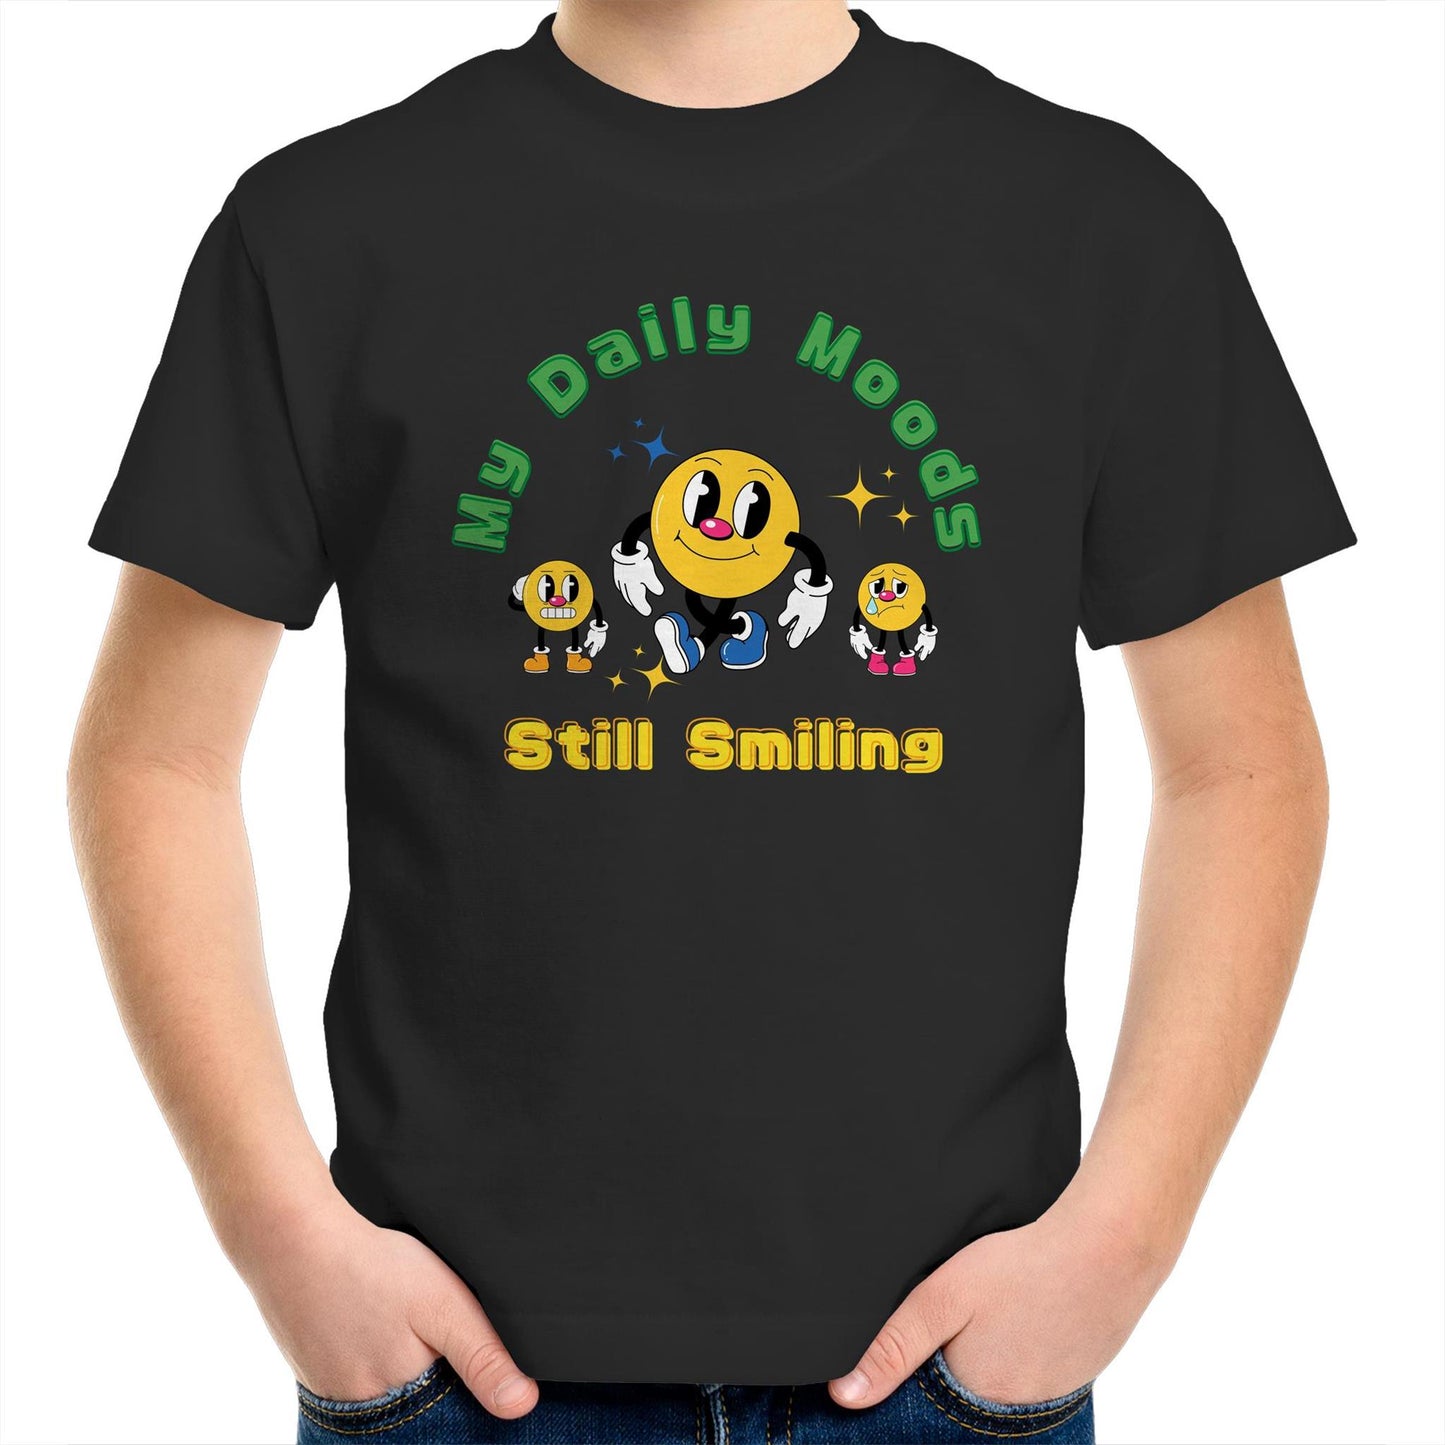 My Daily Moods - Kids Youth Crew T-Shirt Black Kids Youth T-shirt